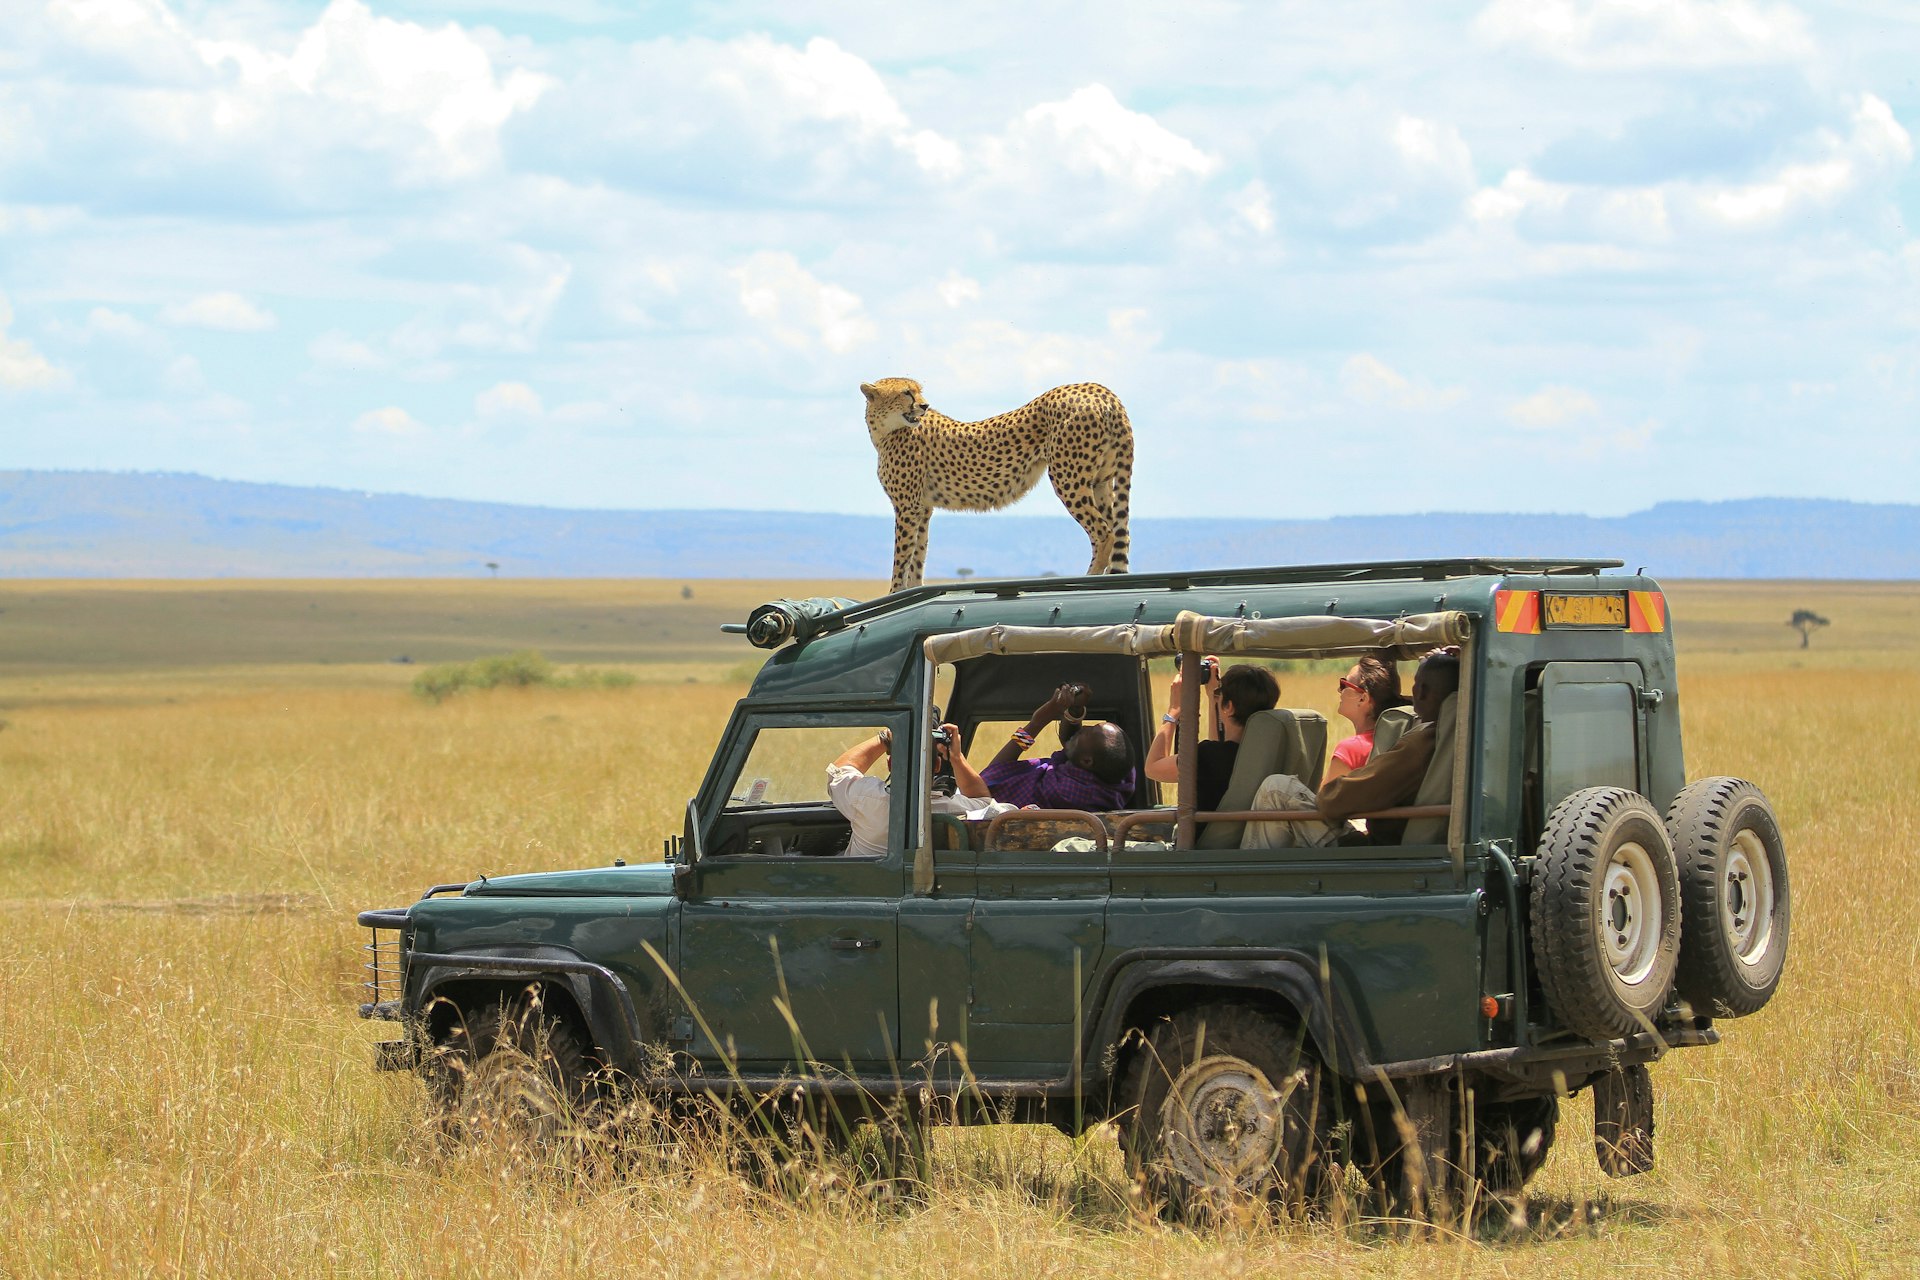 Cheetah interacts with a safari vehicle in Maasai Mara, Kenya